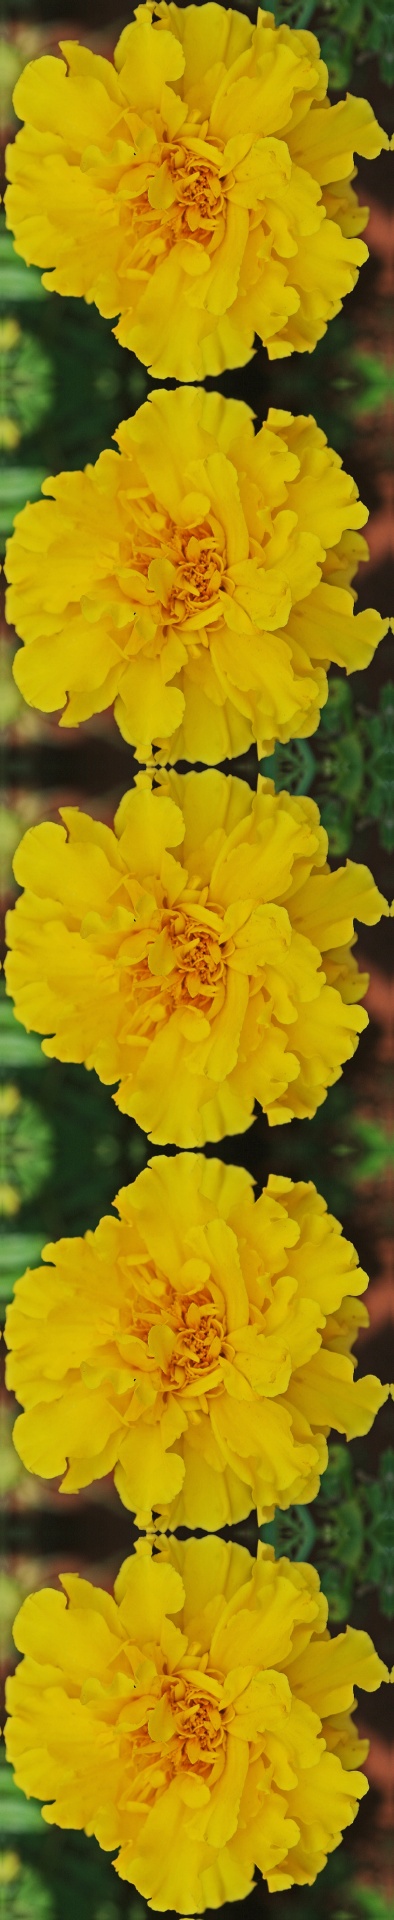 flower yellow repeat free photo